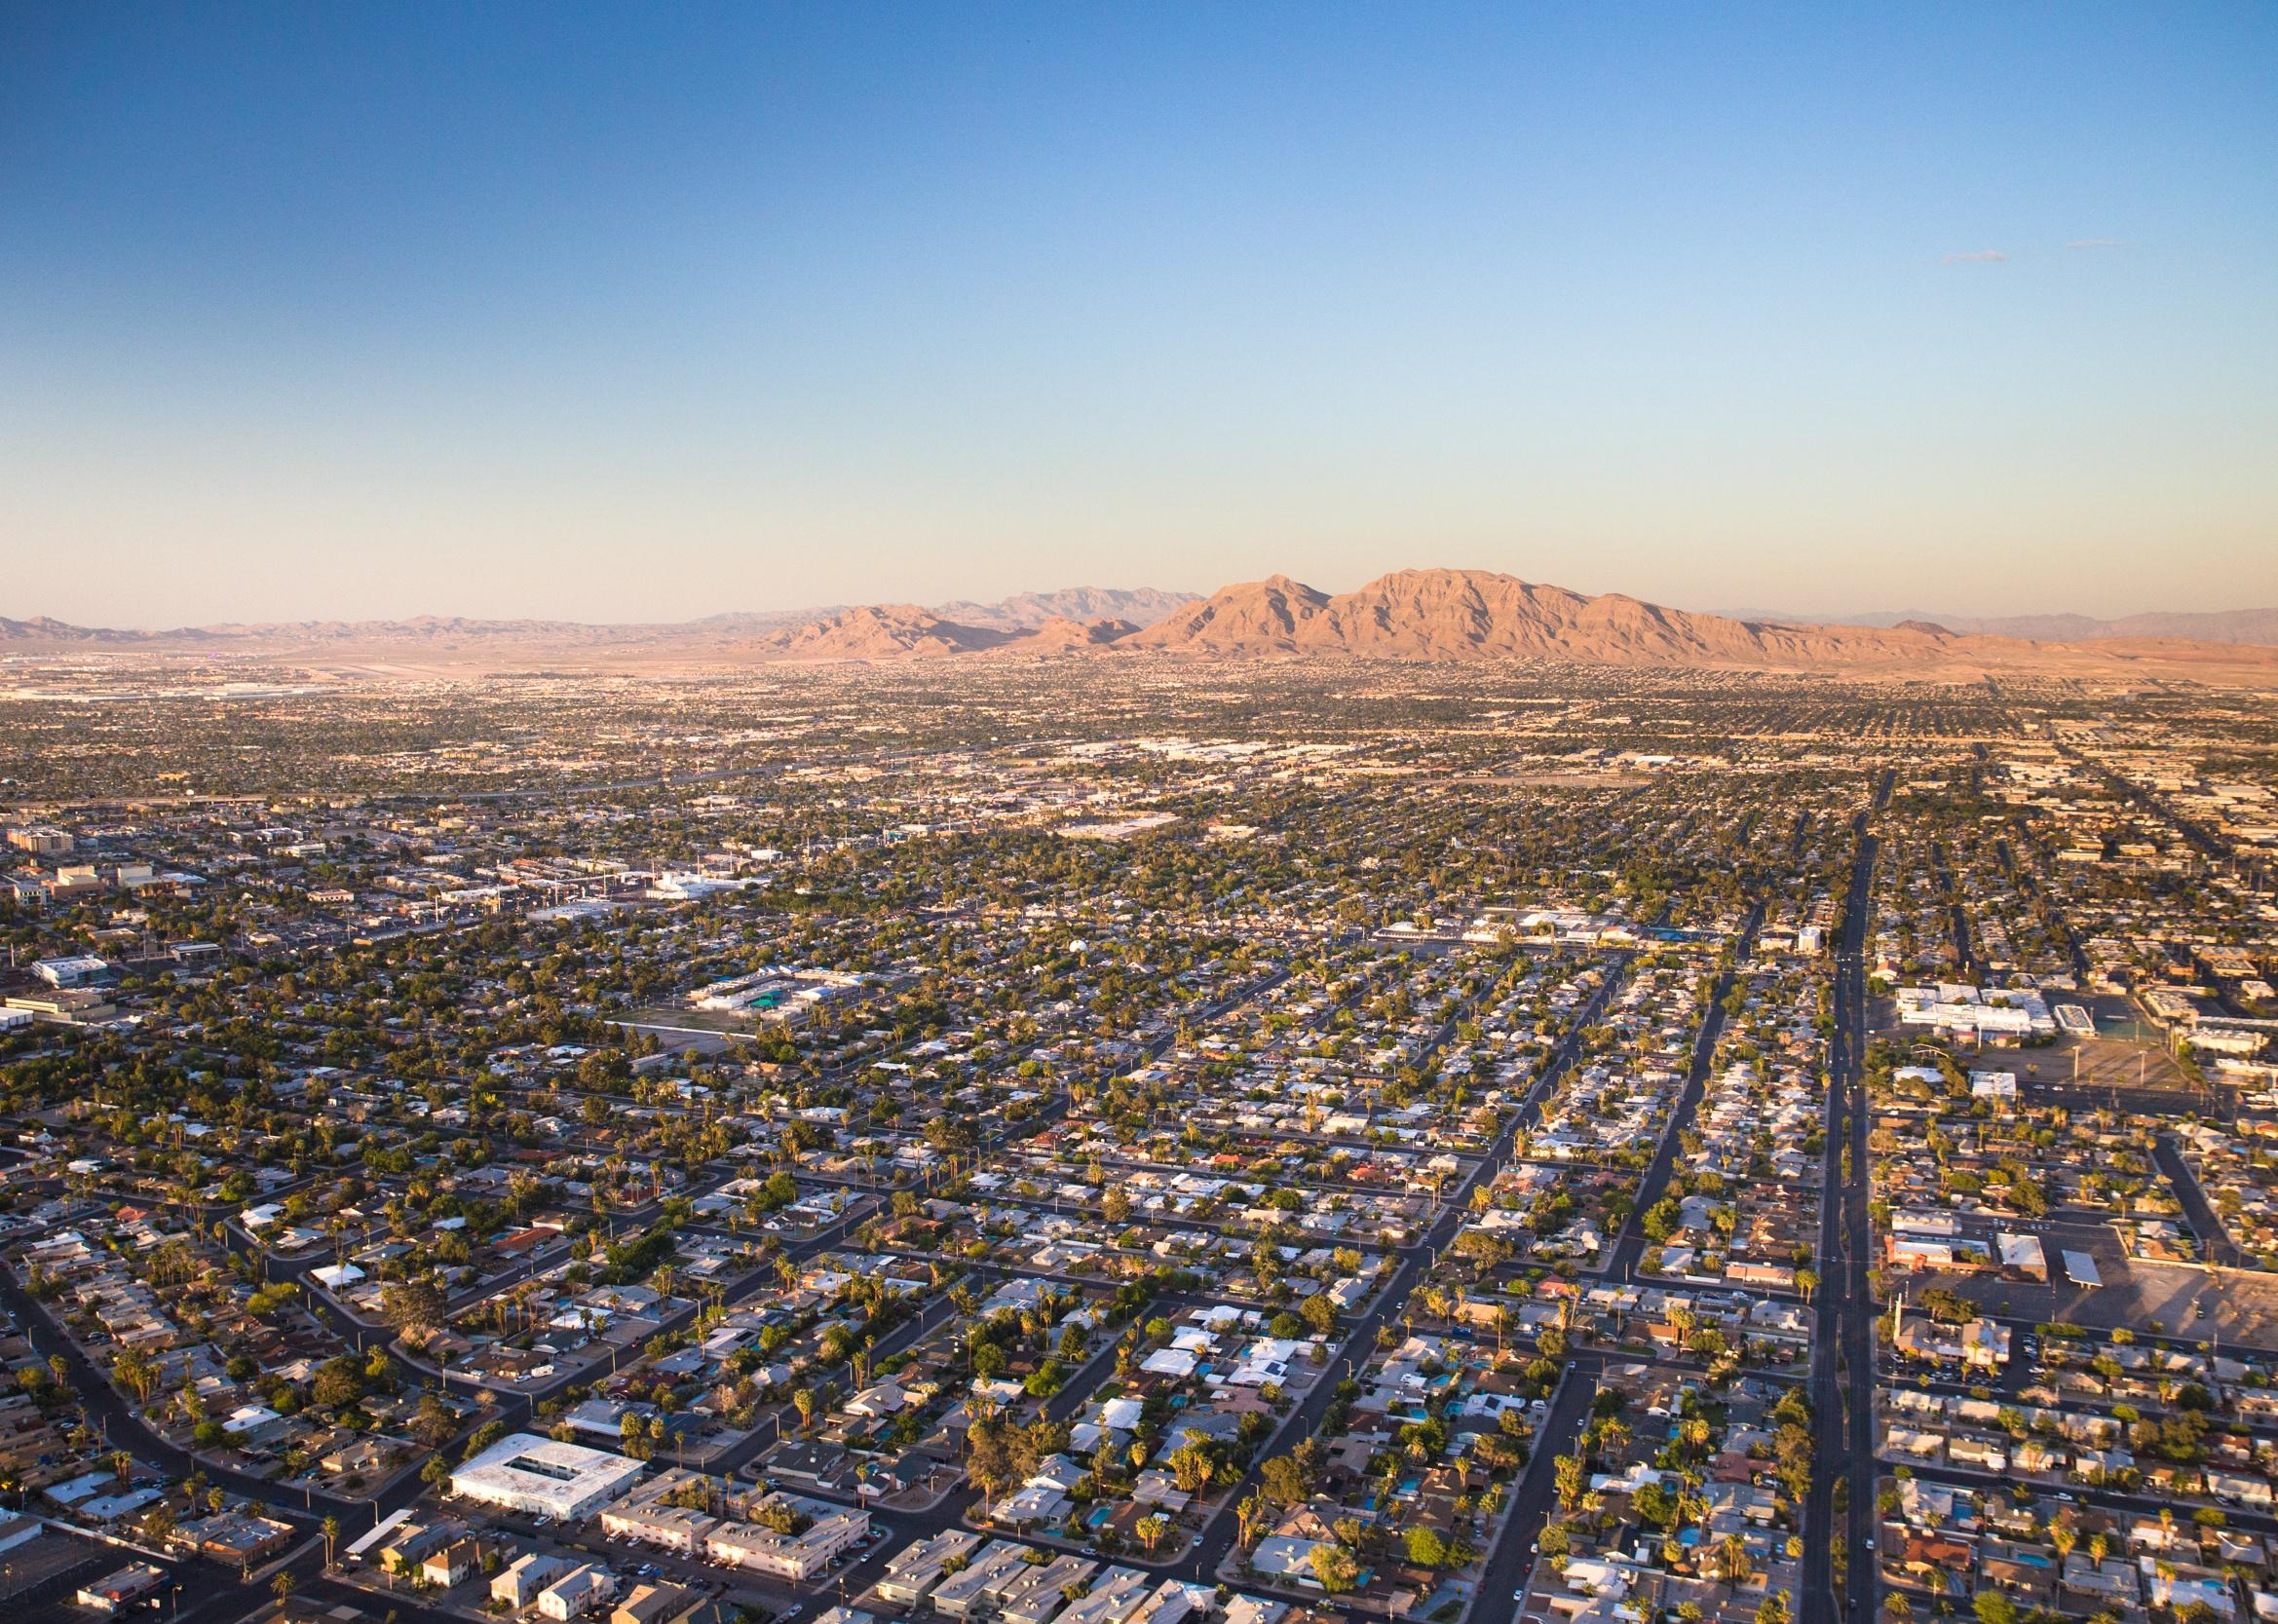 Aerial view across urban suburban communities seen from Las Vegas.